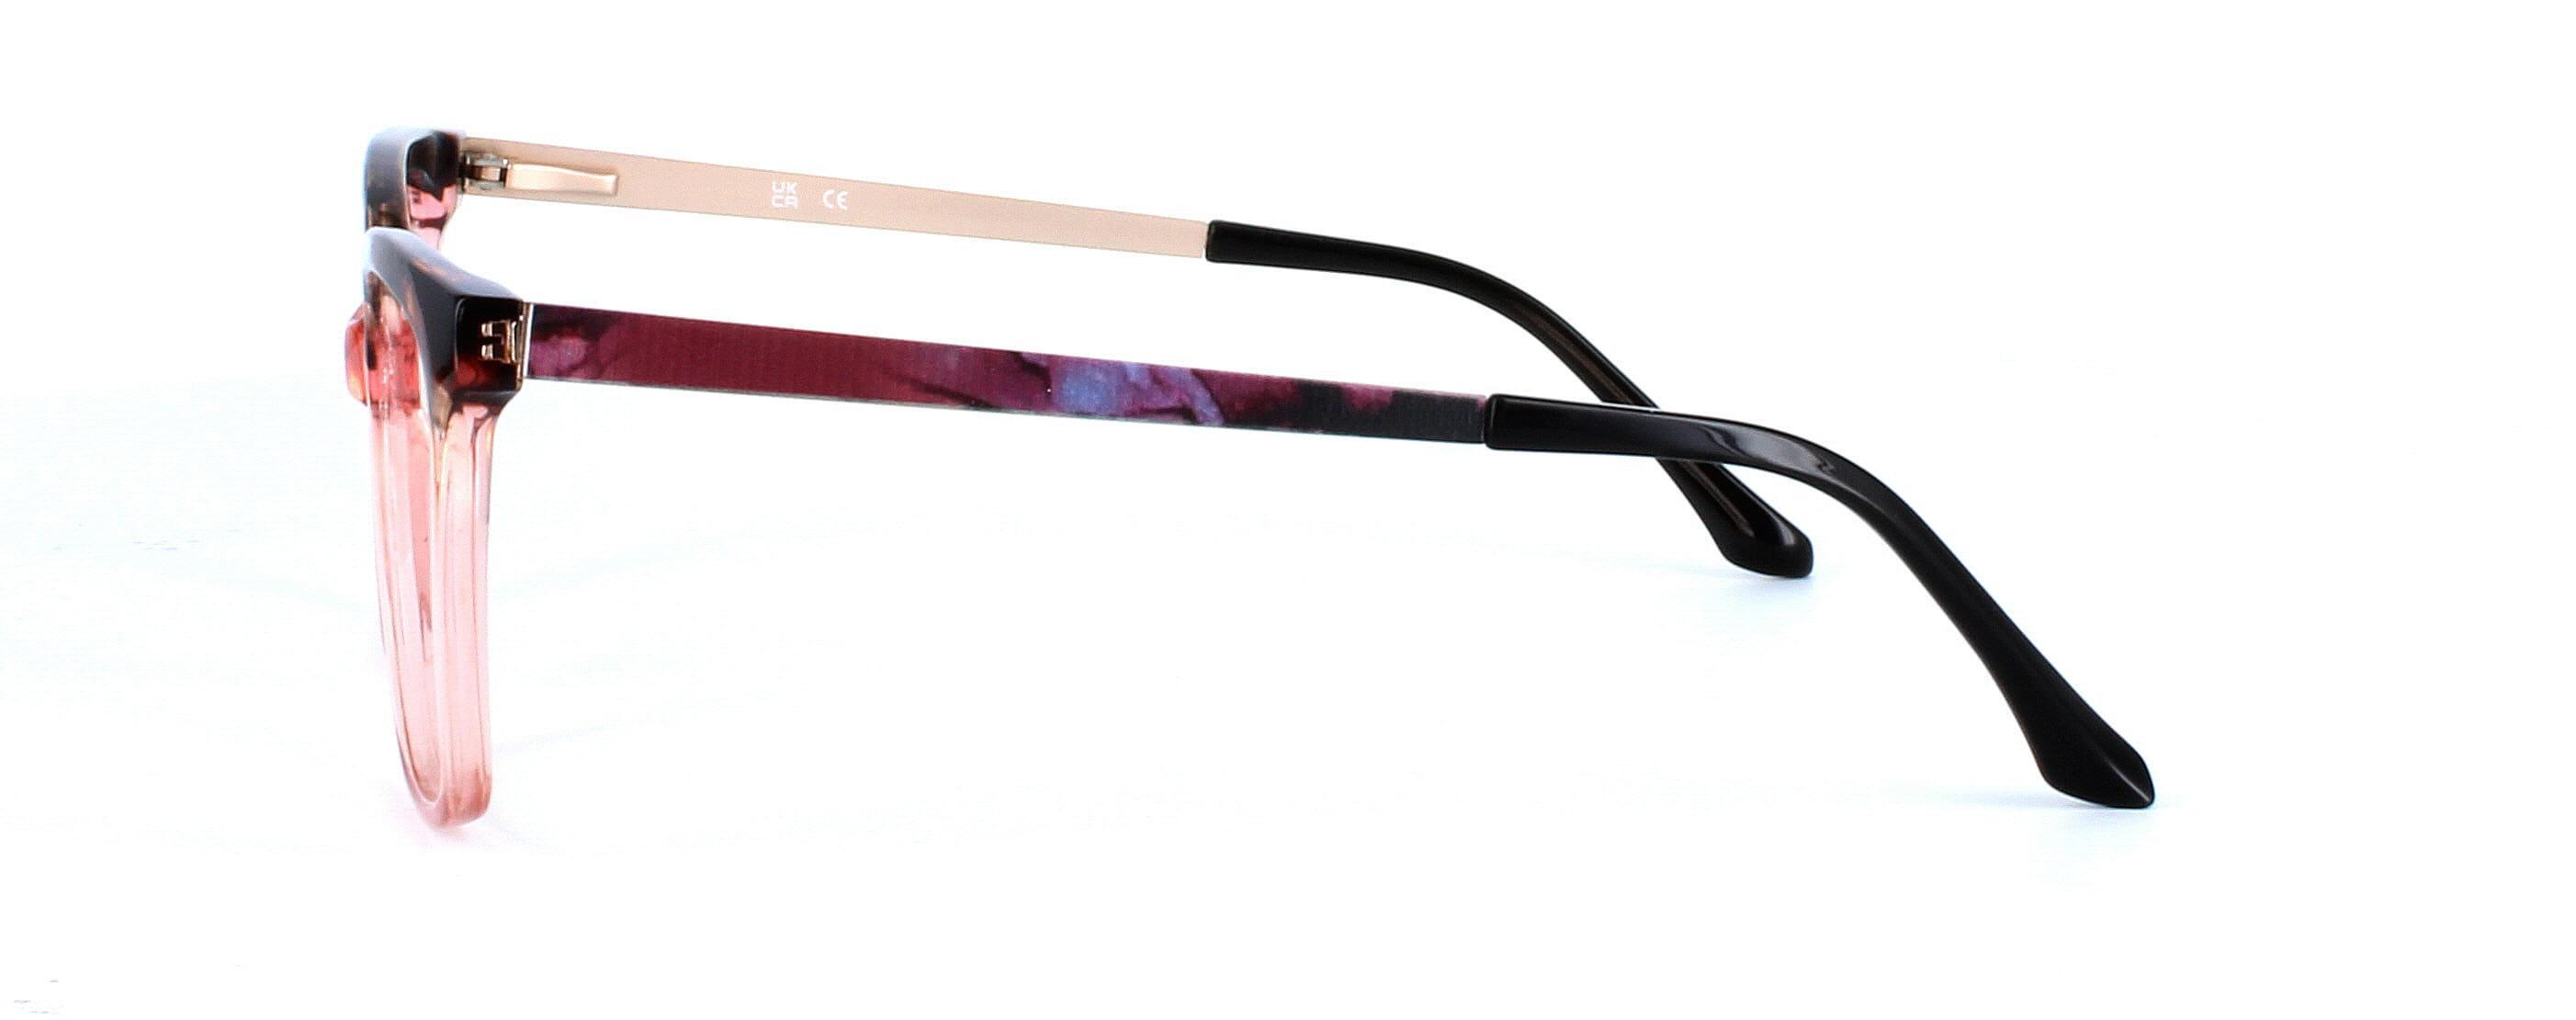 Carina - ladies 2-tone plastic glasses with square shaped lenses - image view 2